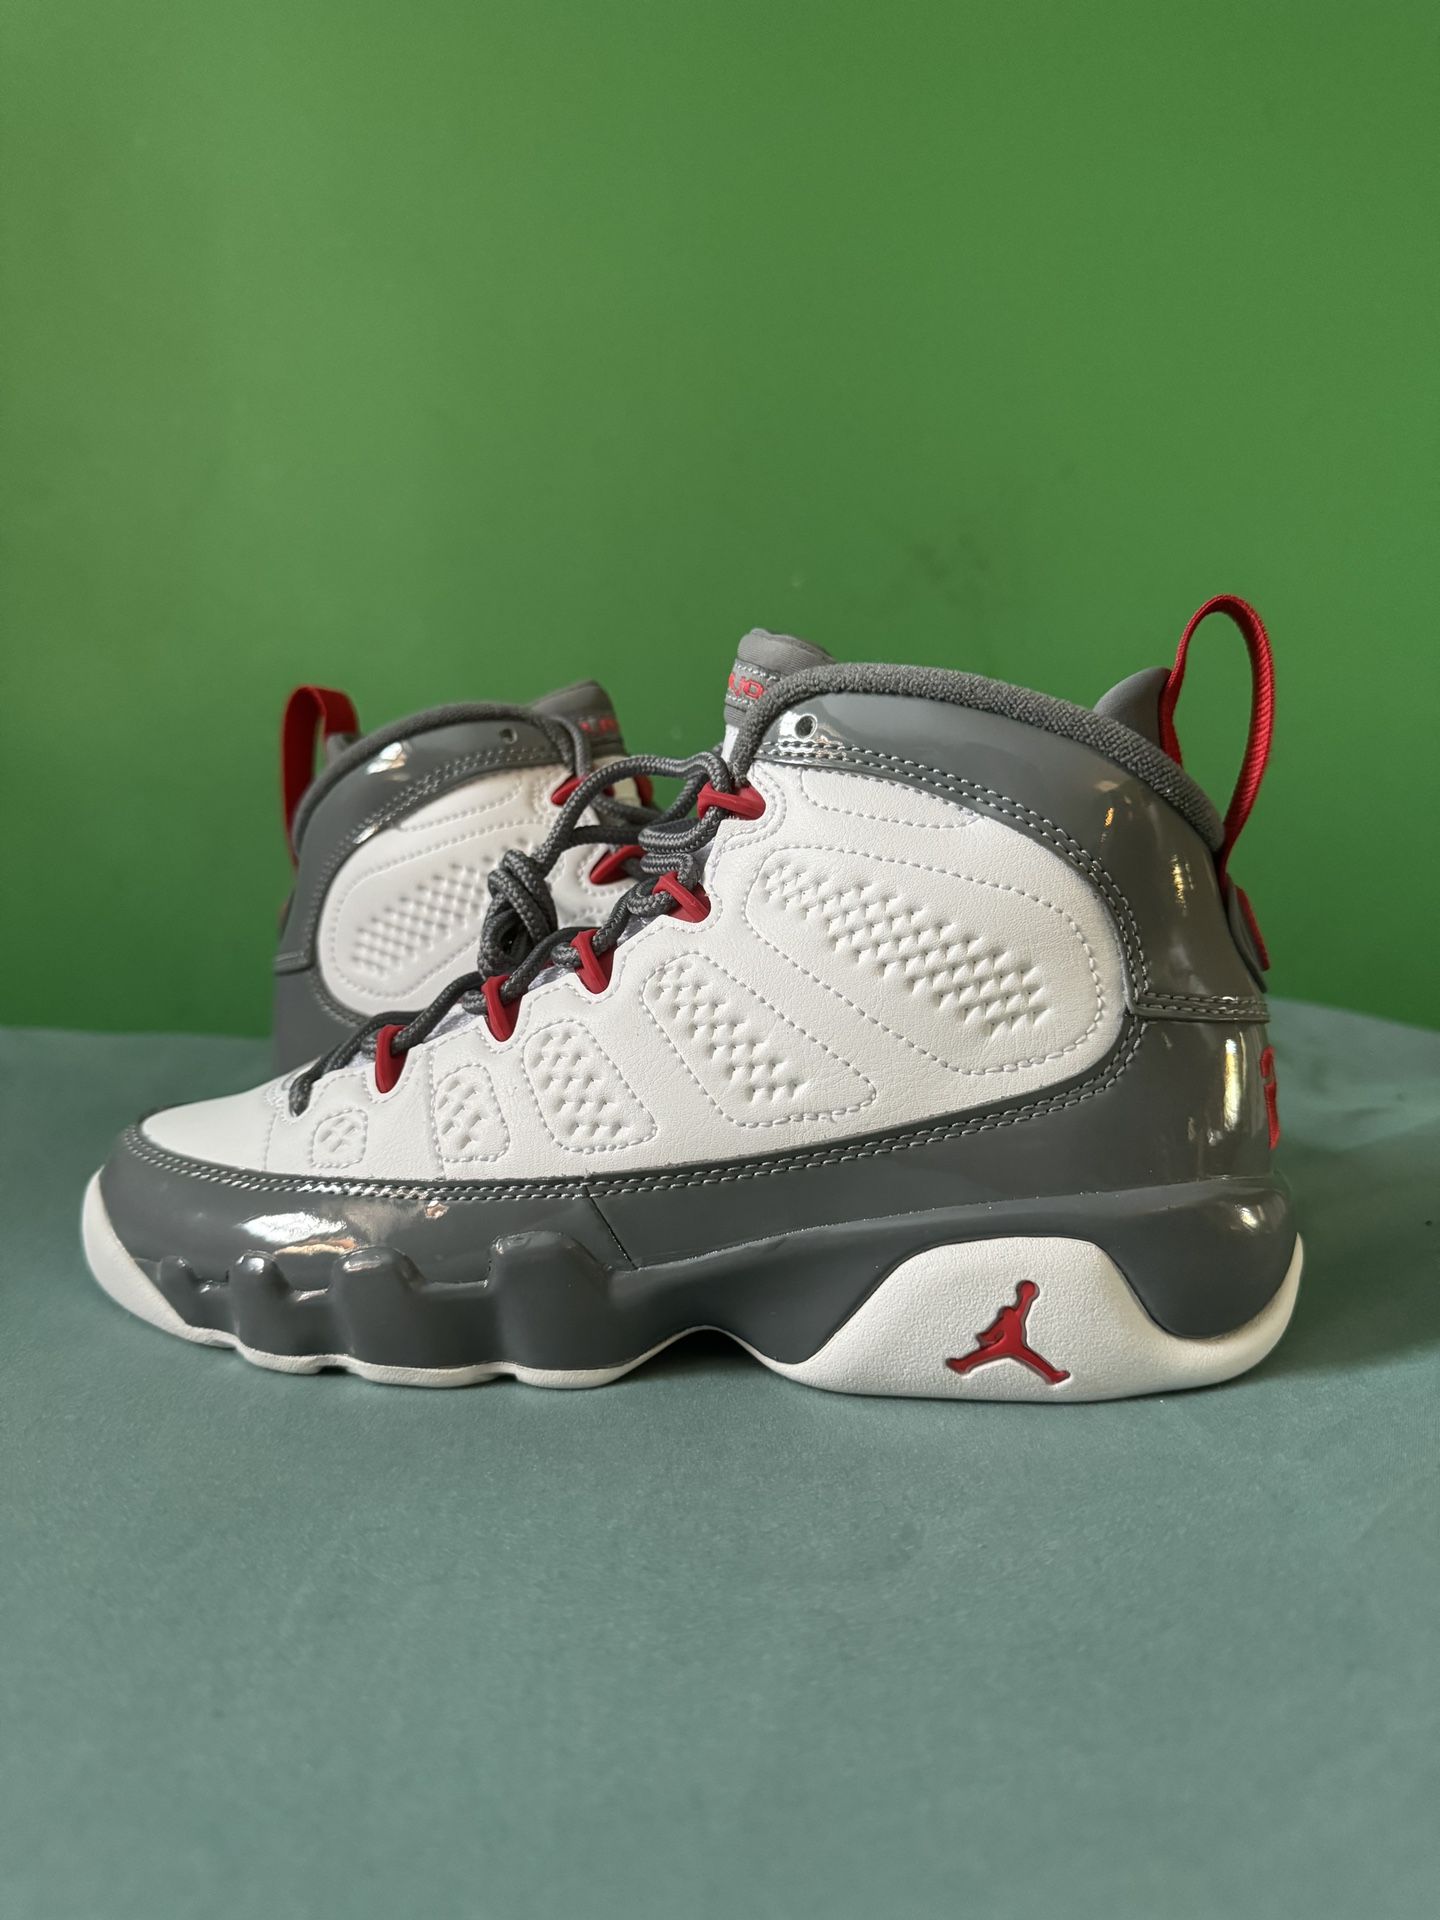 Nike Air Jordan 9 Fire Red Size 6